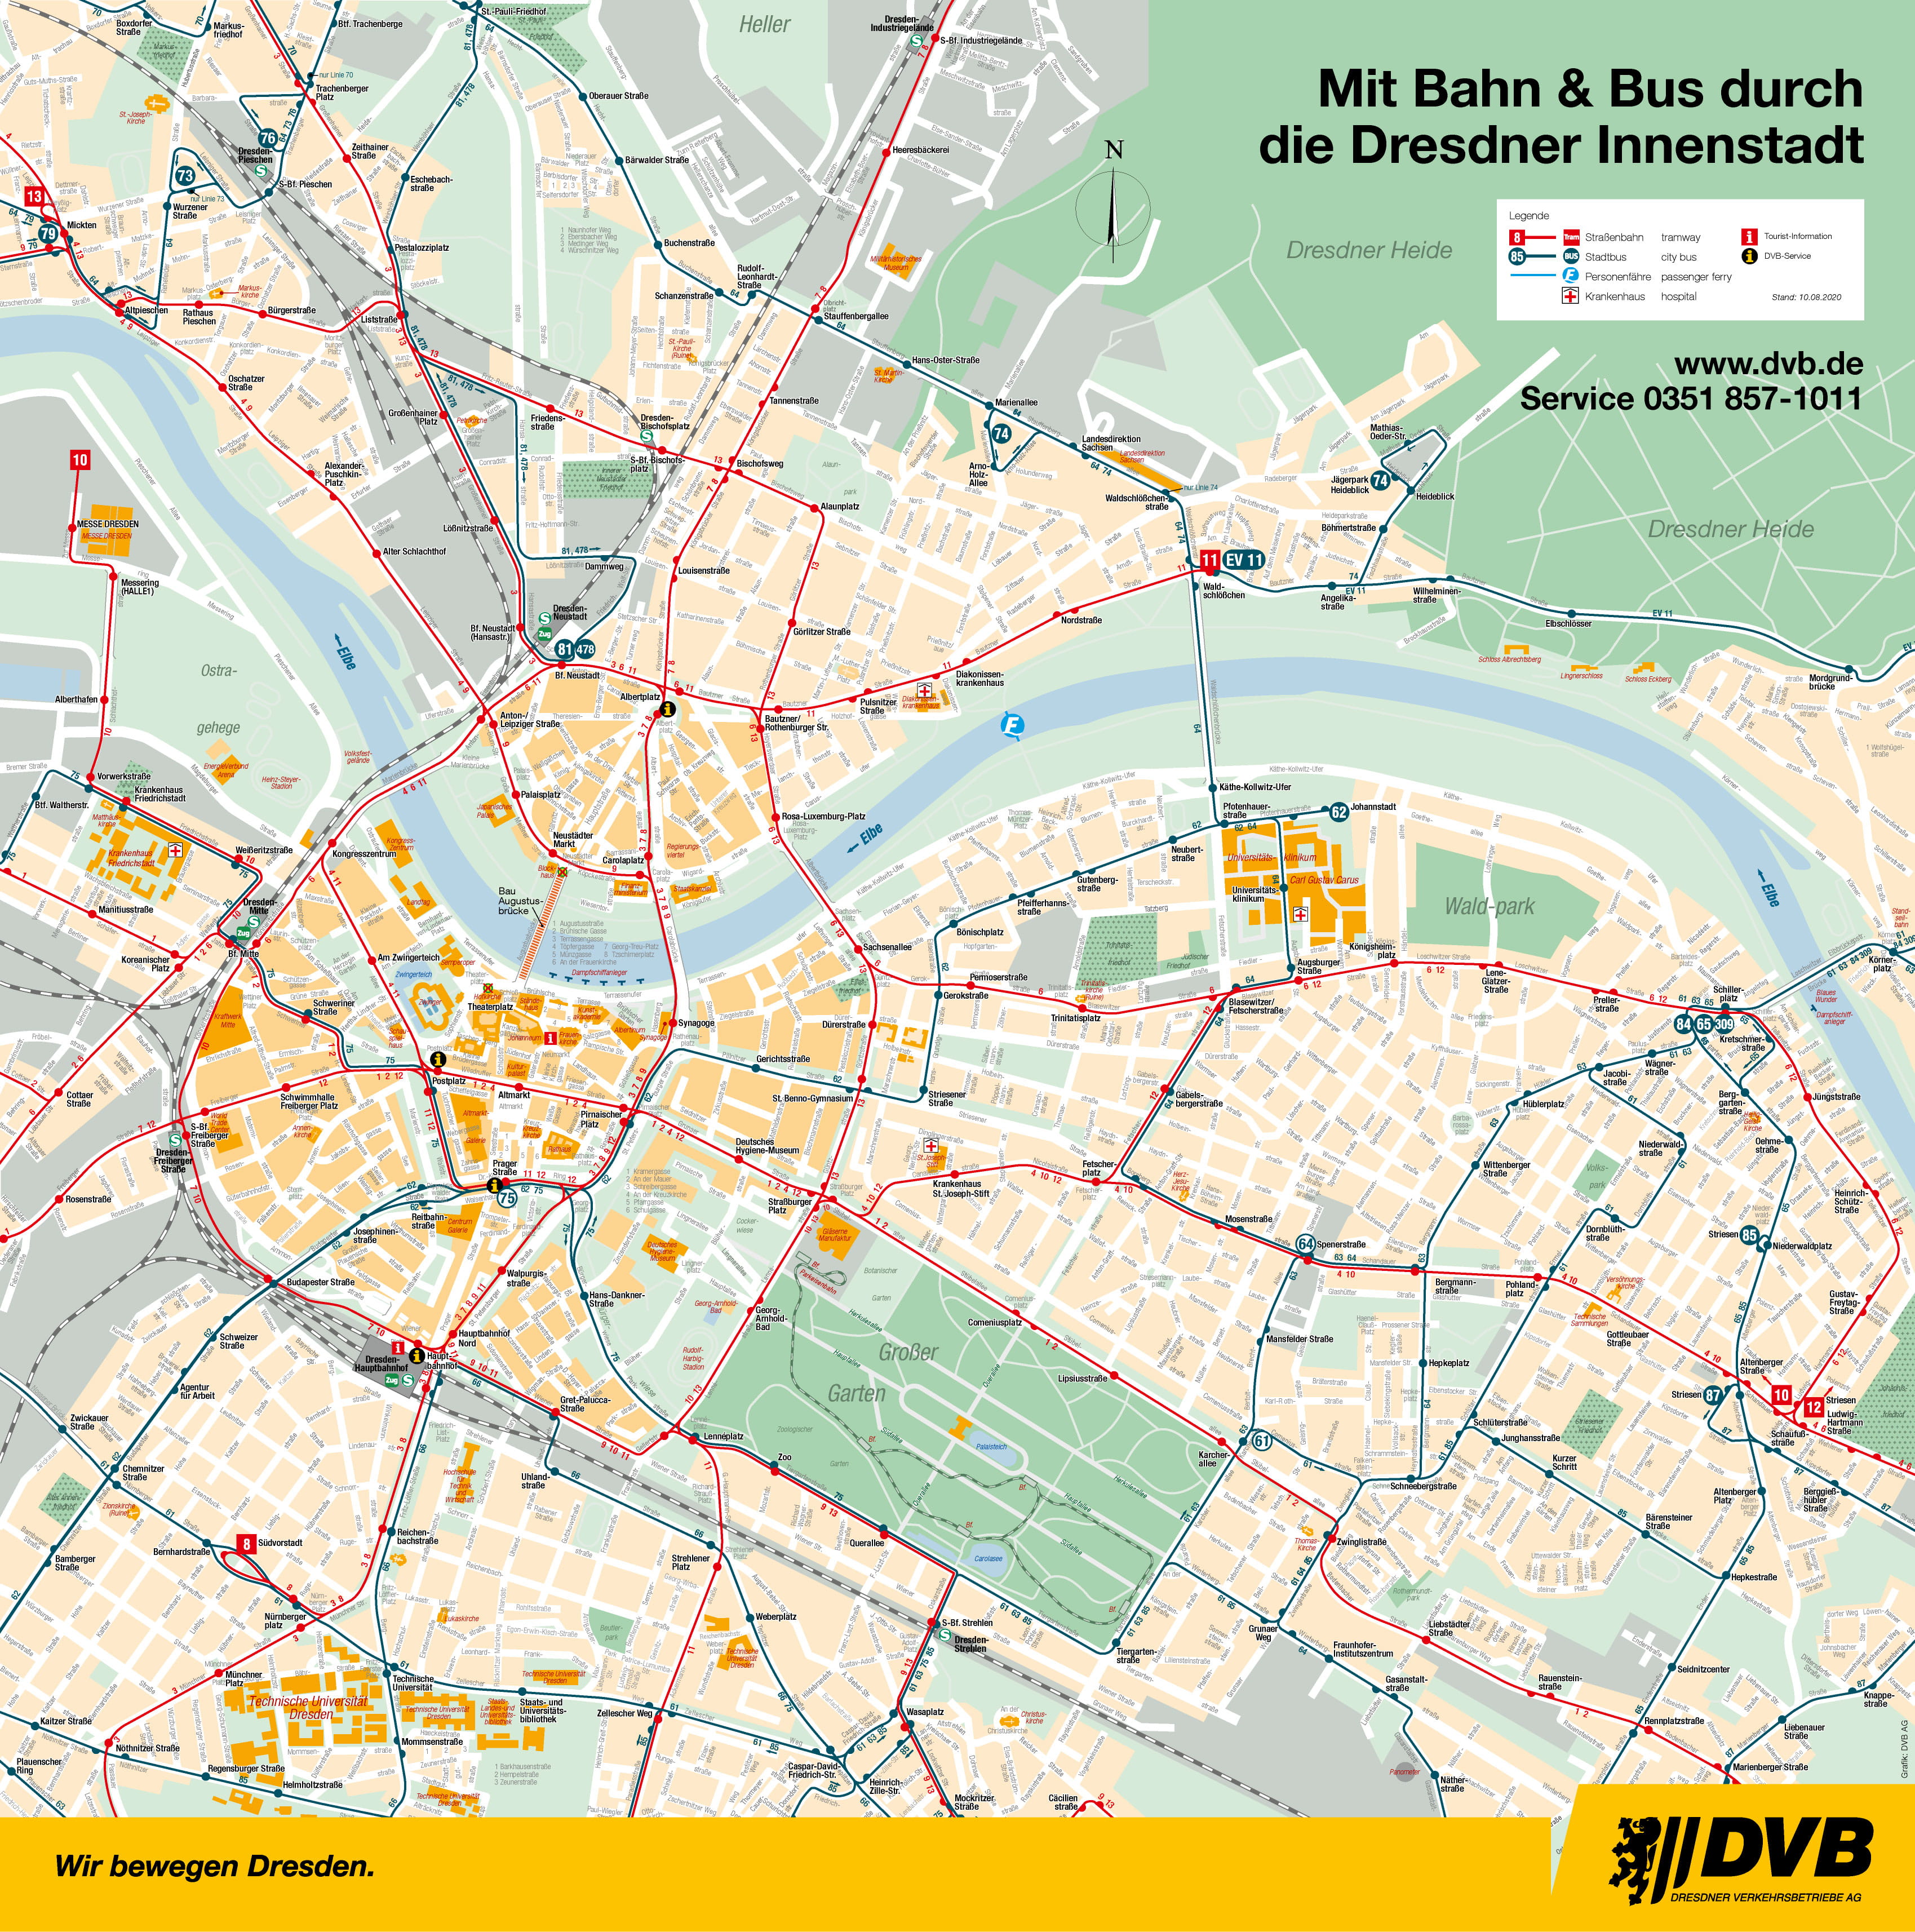 City maps - DVB | Dresdner Verkehrsbetriebe AG